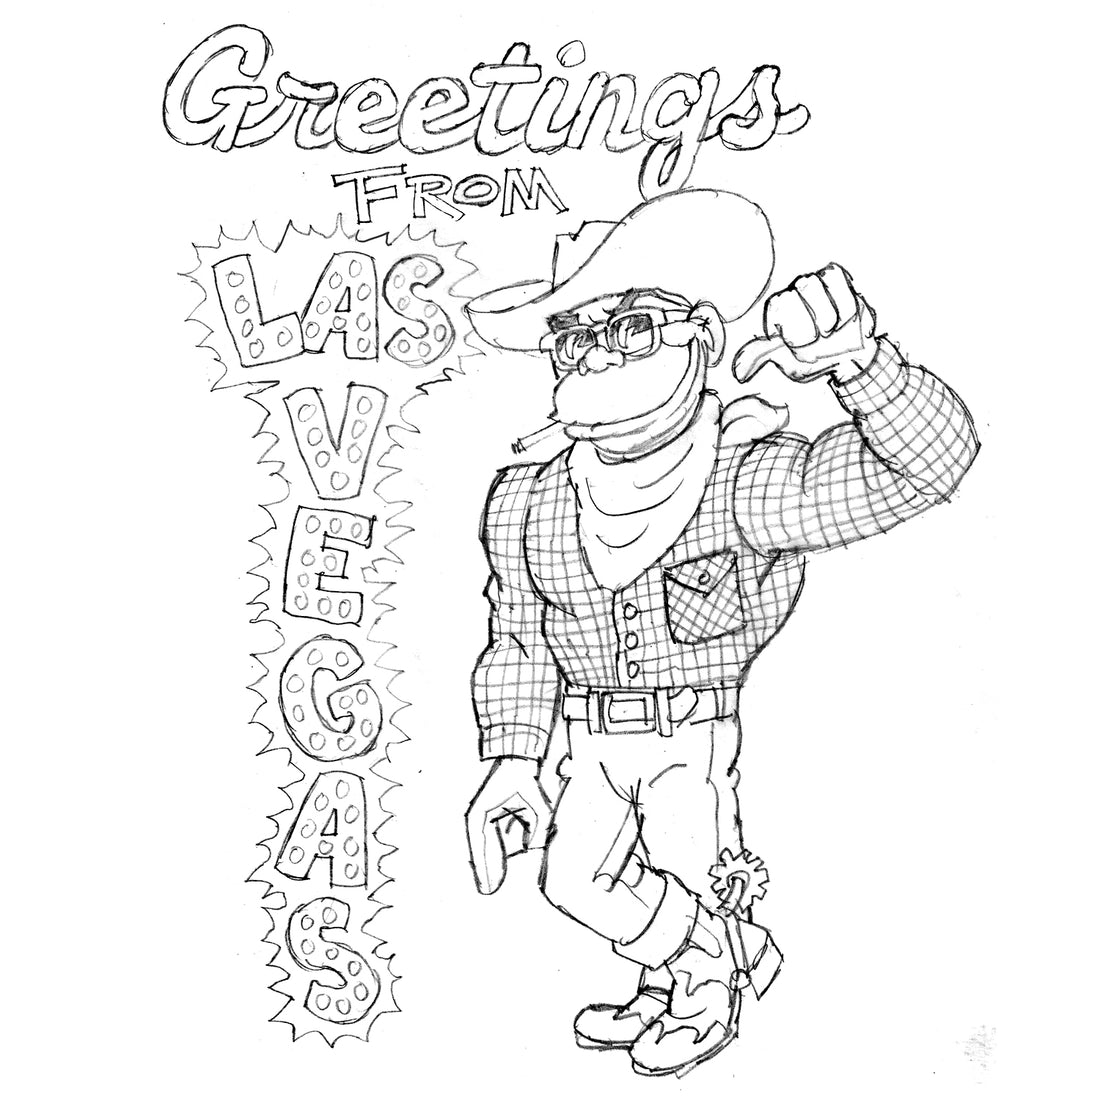 Steve Nazar's Daily Doodle 6.13.18 - "Vegas Thrilla"